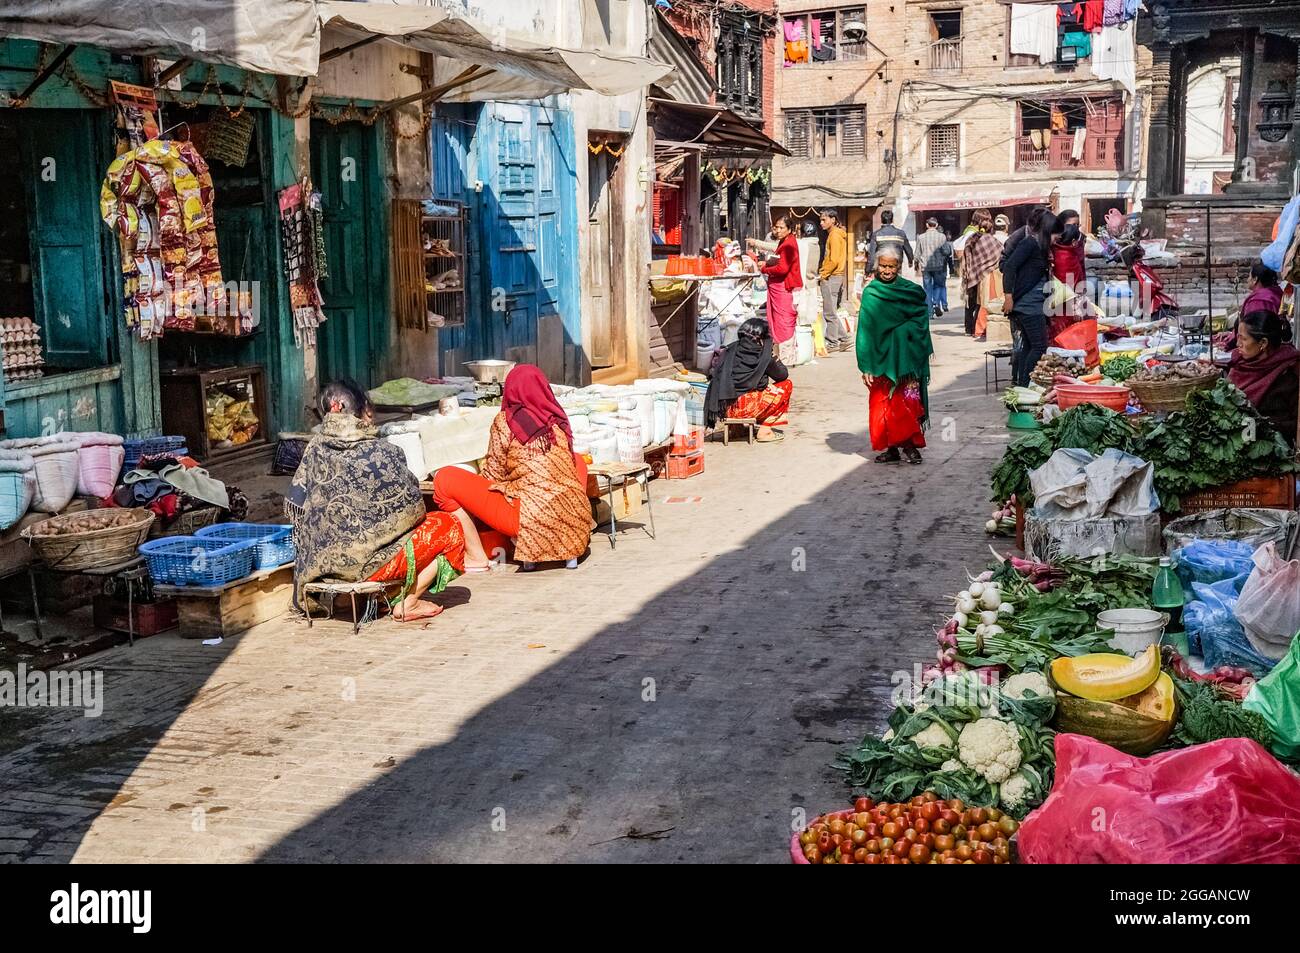 Street market in Kathmandu Durbar Square, Nepal Stock Photo